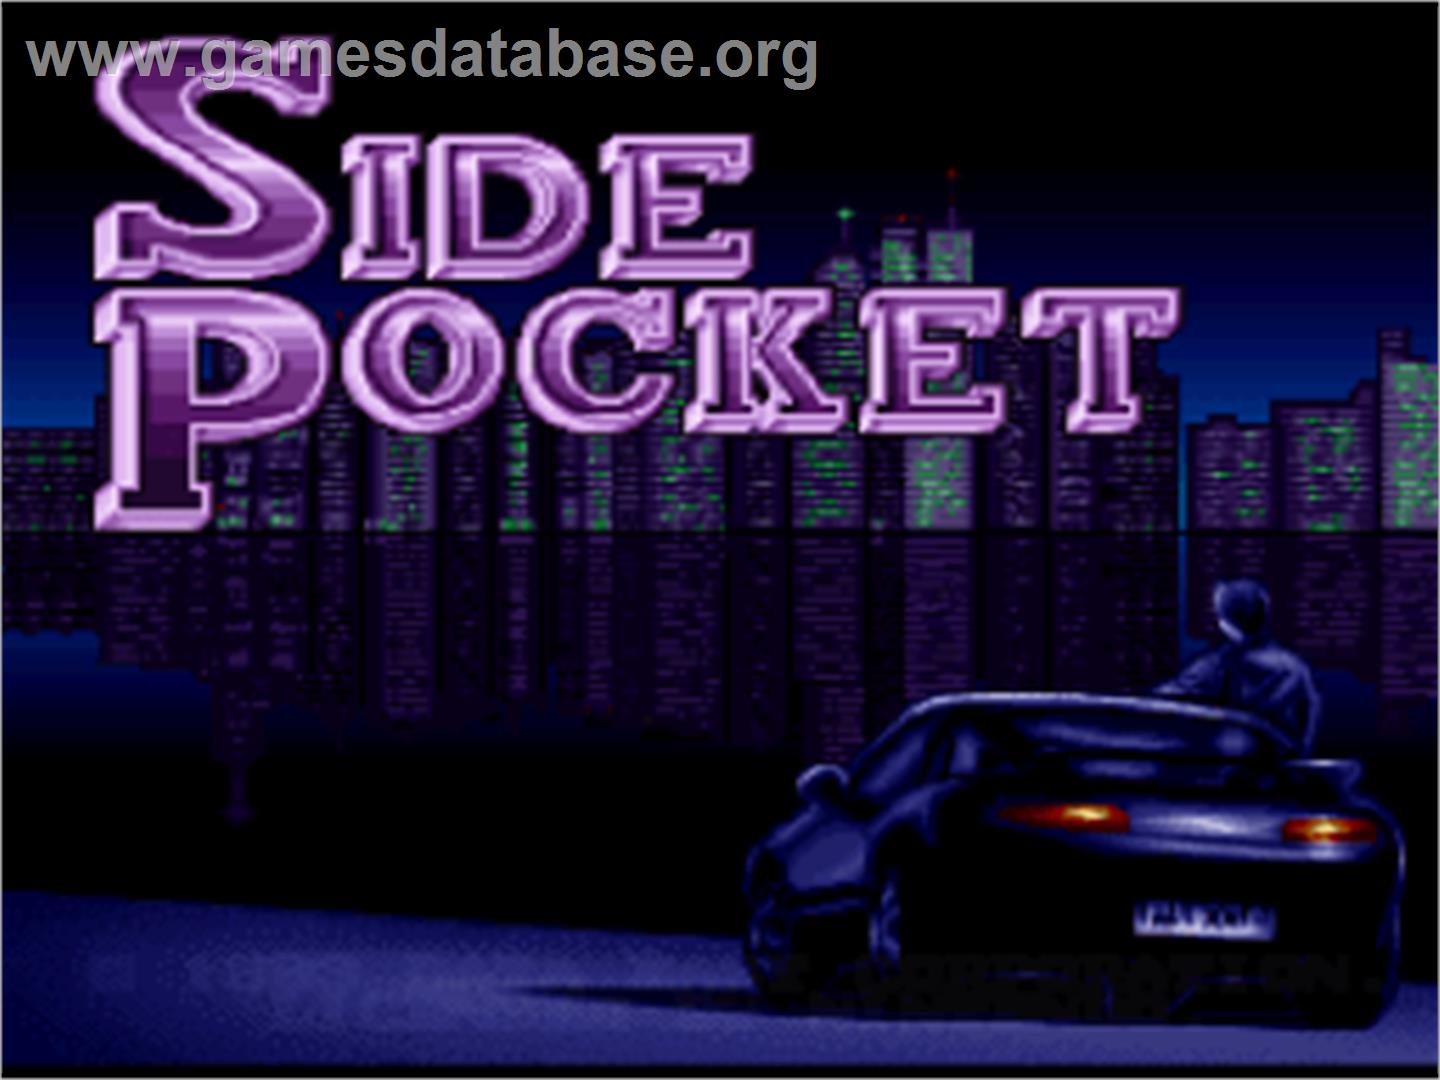 Side Pocket - Nintendo SNES - Artwork - Title Screen